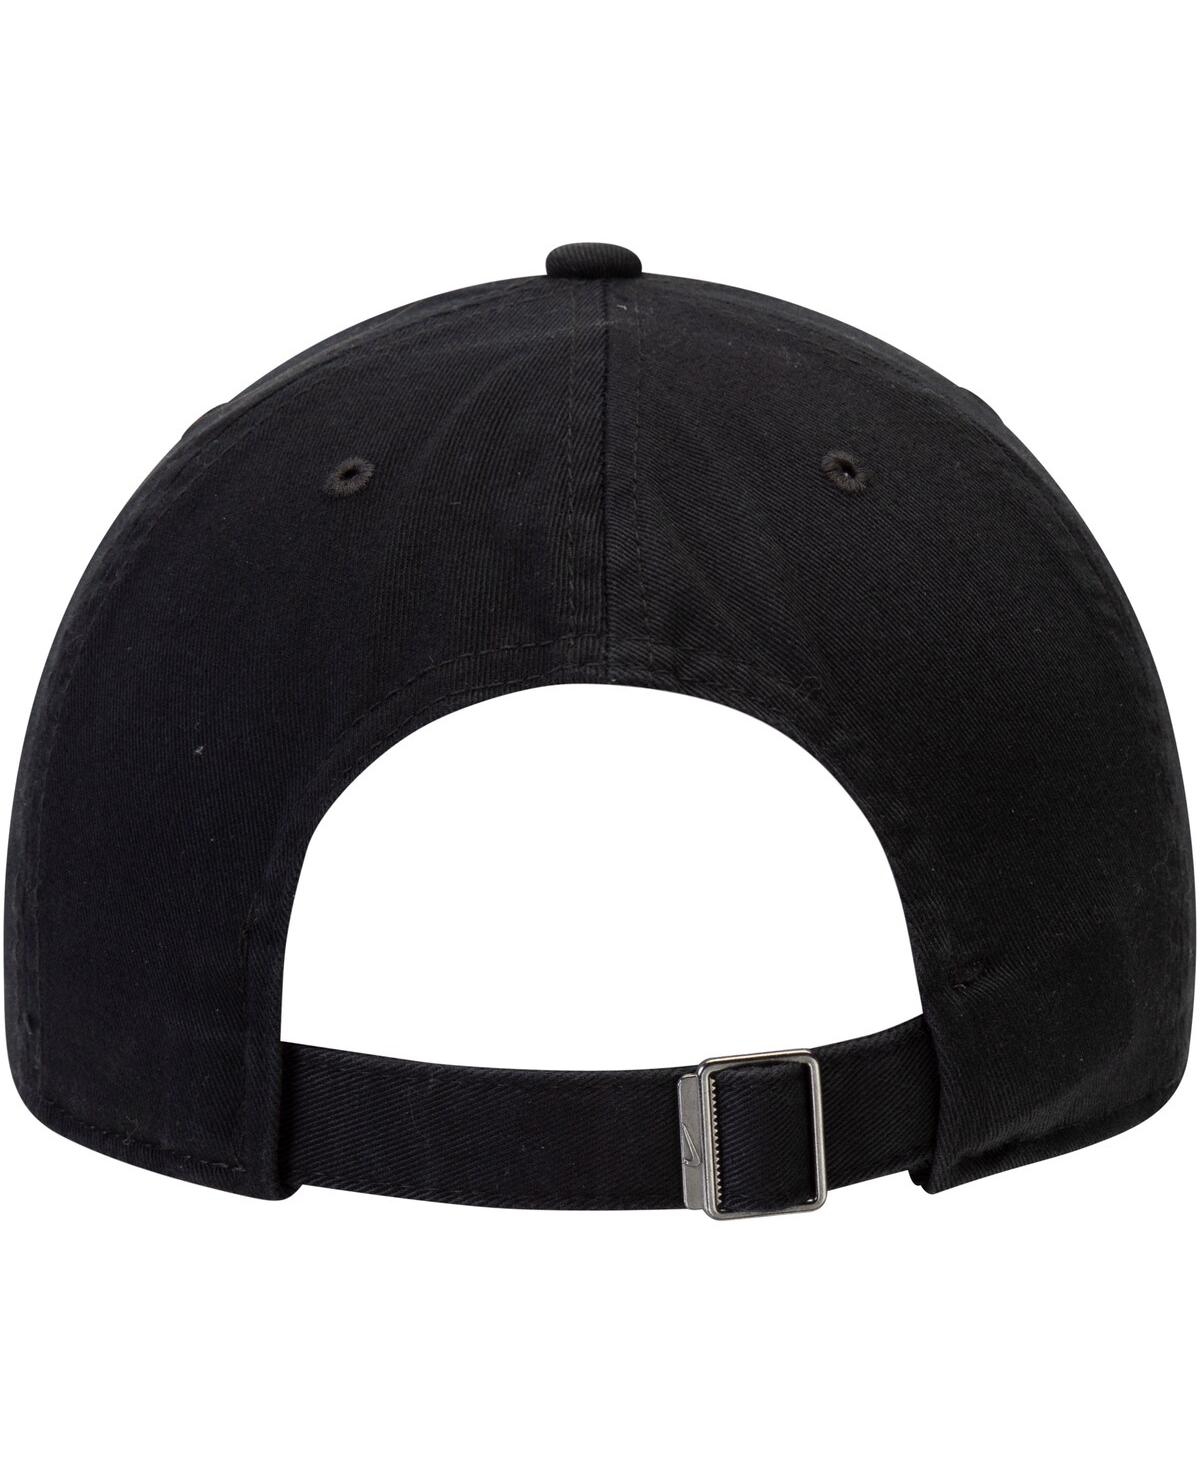 Shop Nike Youth Boys And Girls  Black Heritage 86 Futura Adjustable Hat